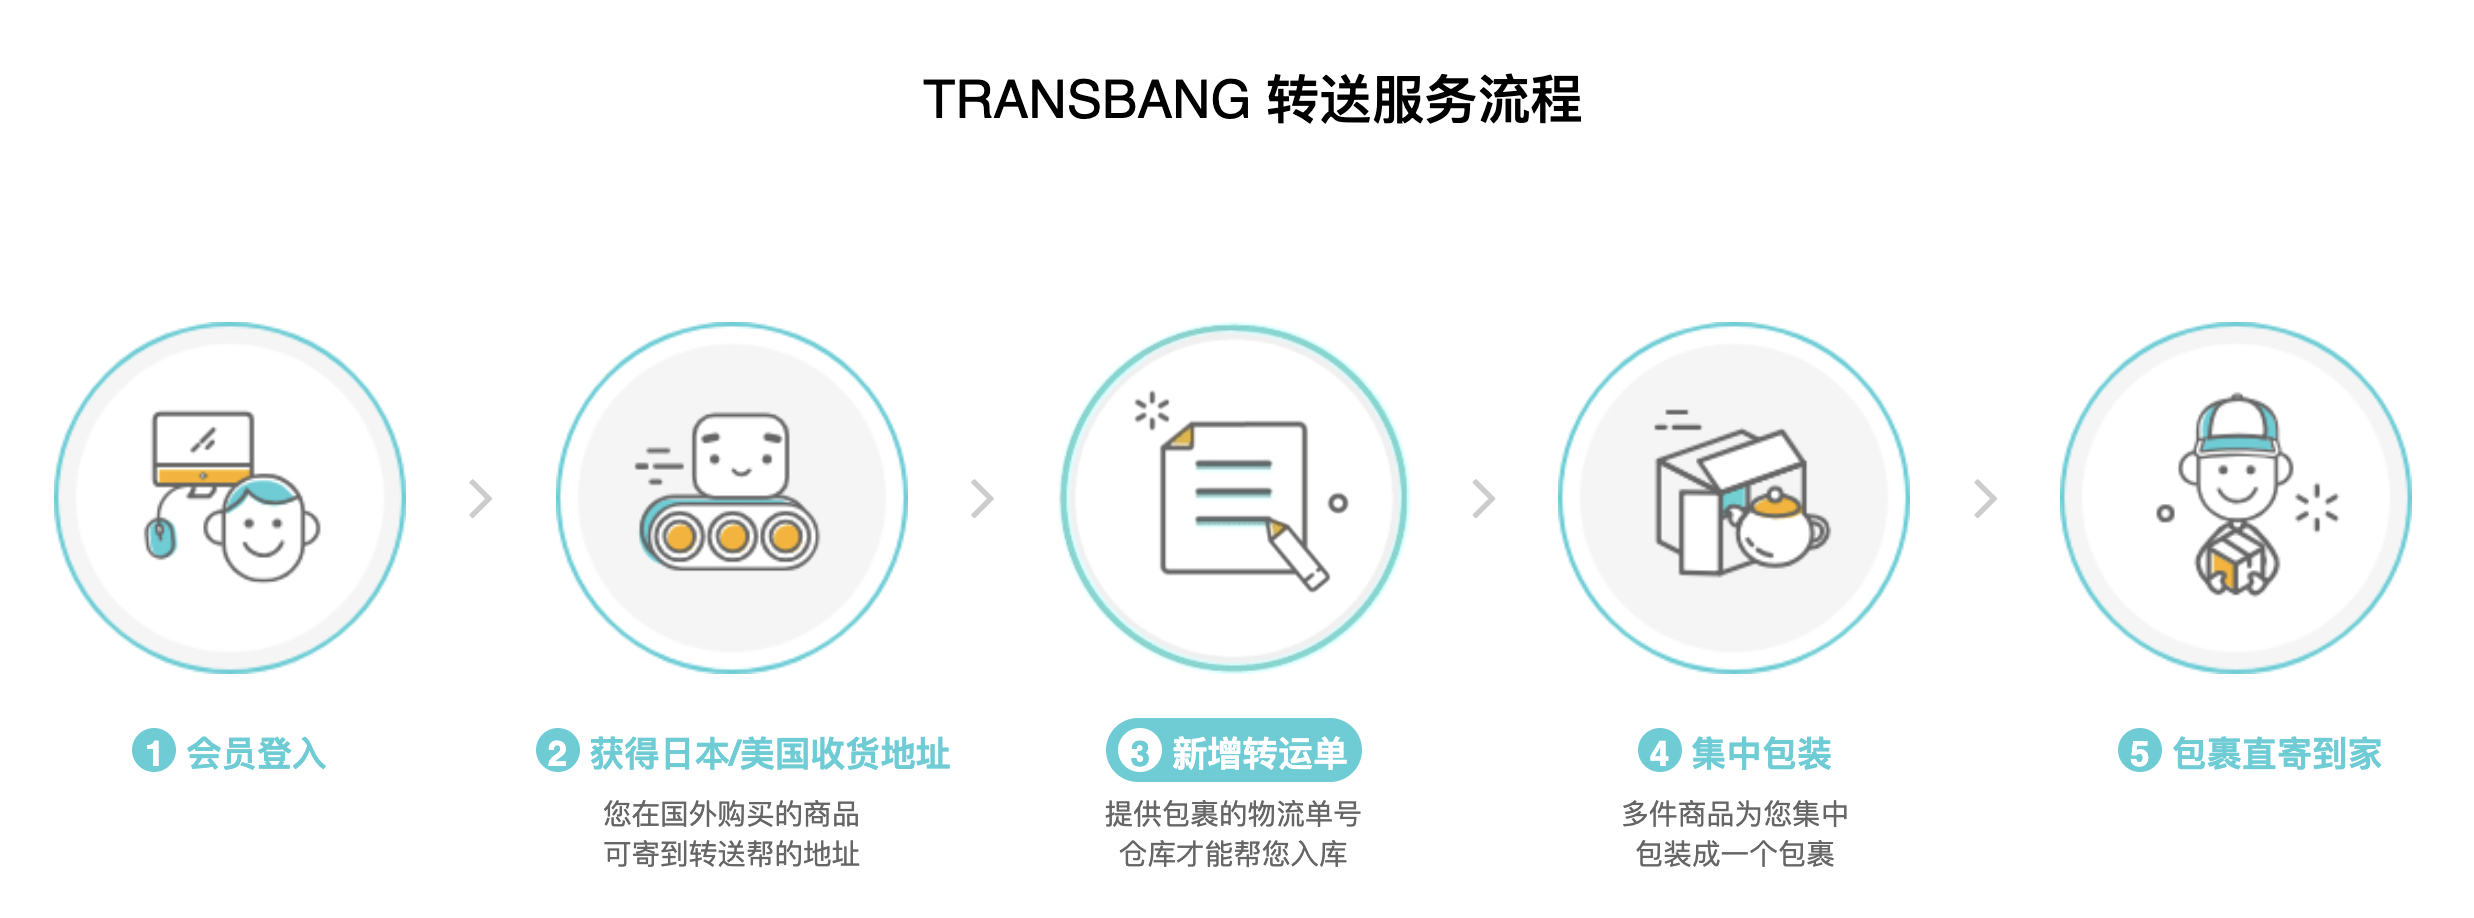 TRANSBANG 转送帮服务流程